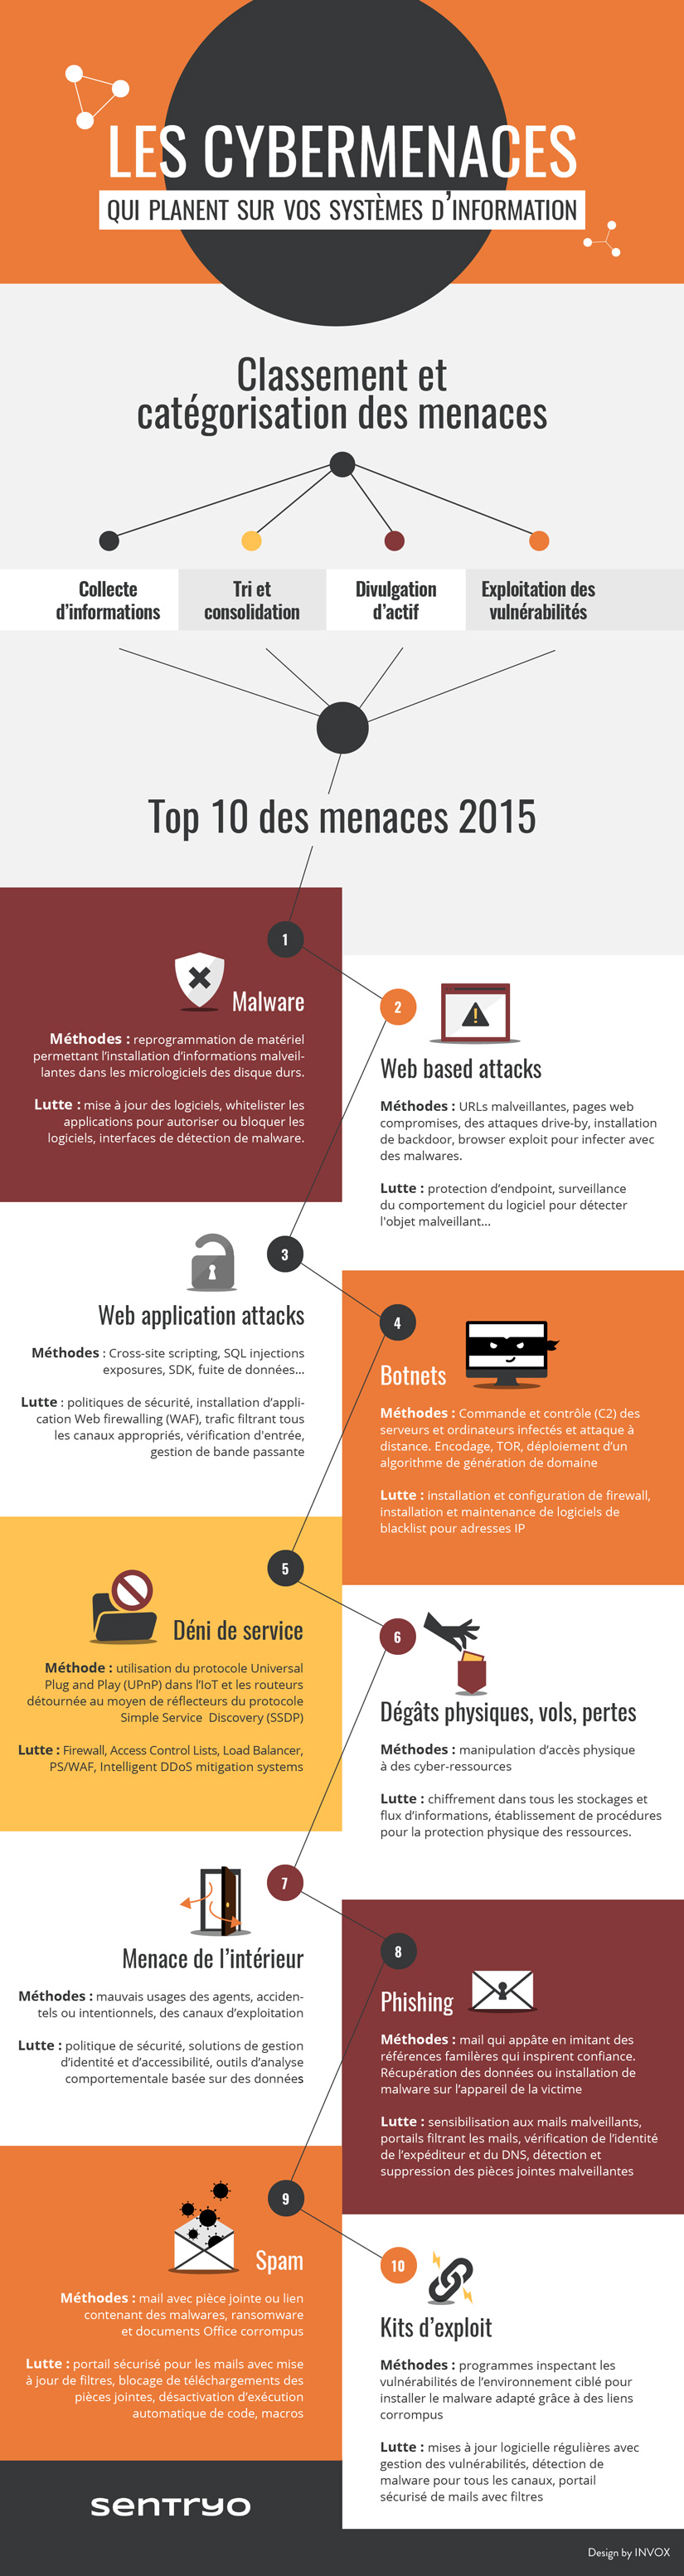 infographie cybermenaces